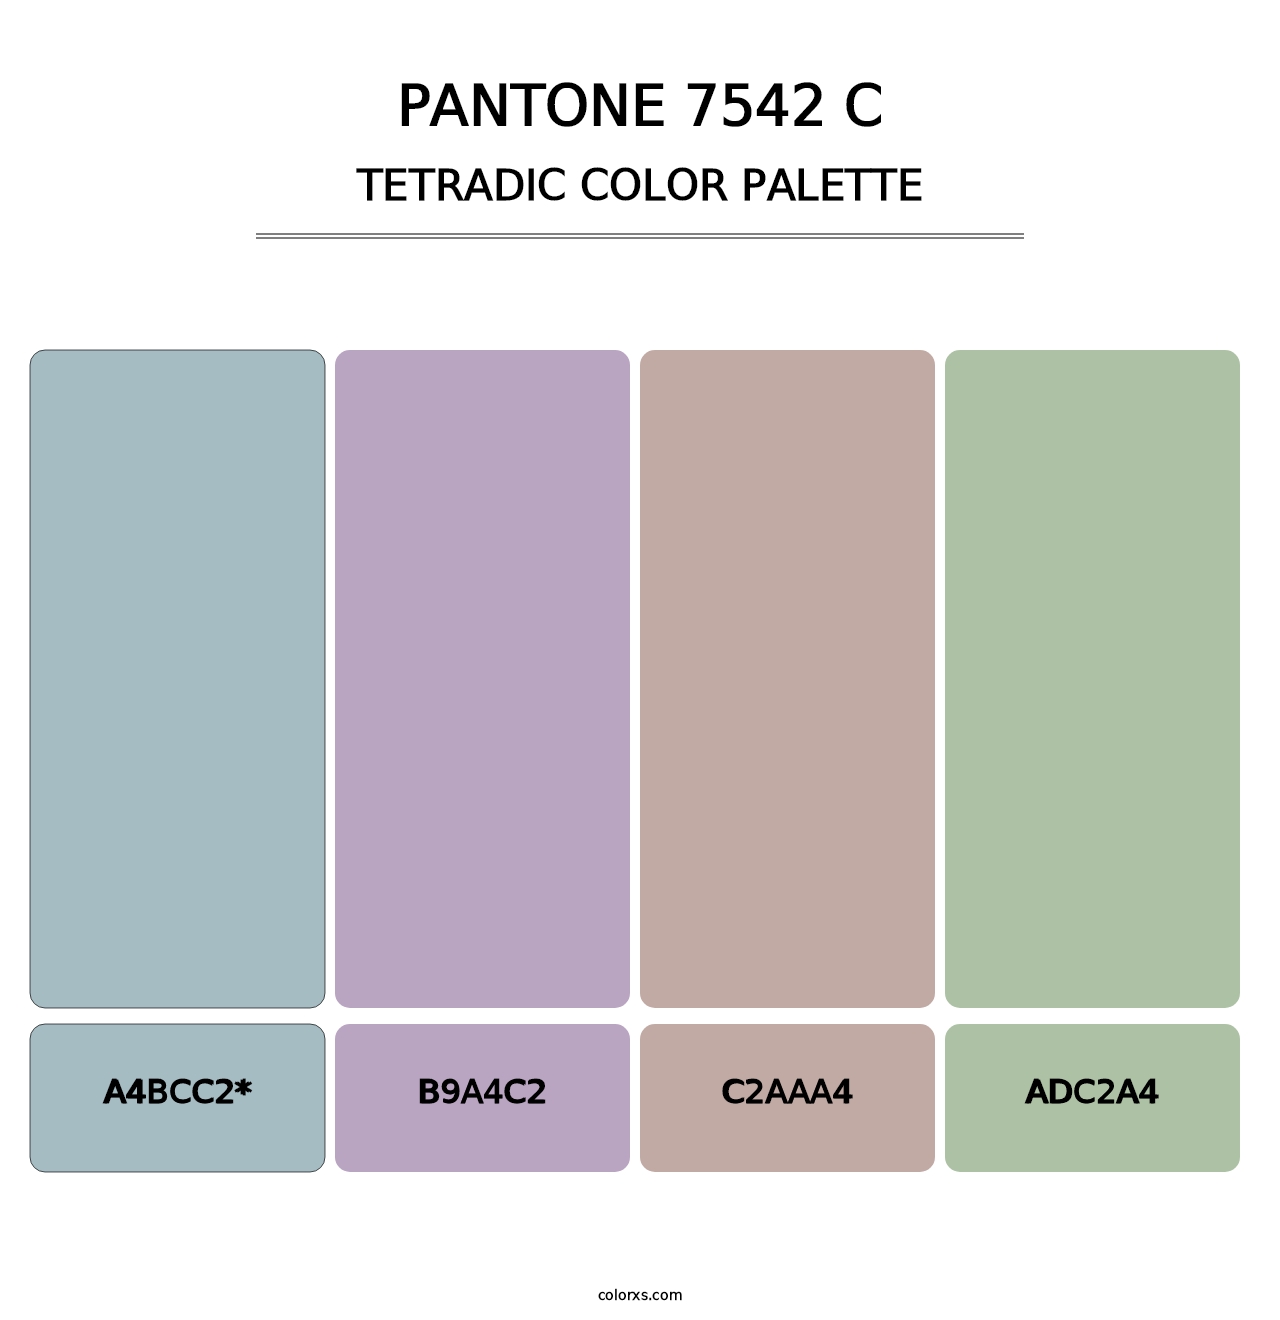 PANTONE 7542 C - Tetradic Color Palette